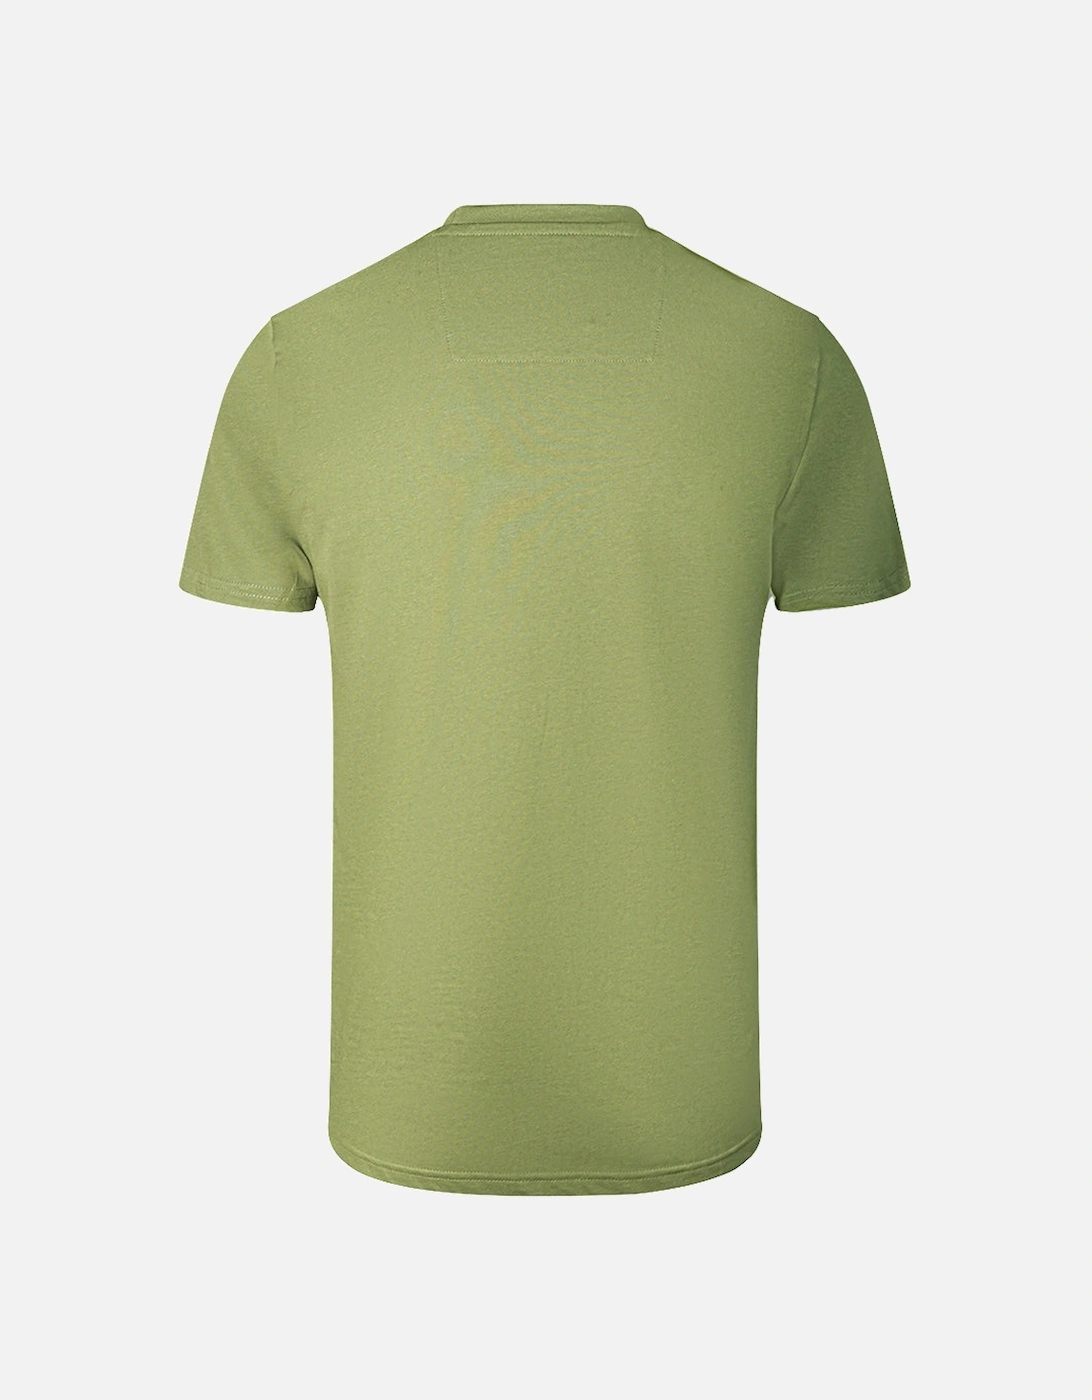 Cavalli Class Leopard Print Silhouette Green T-Shirt